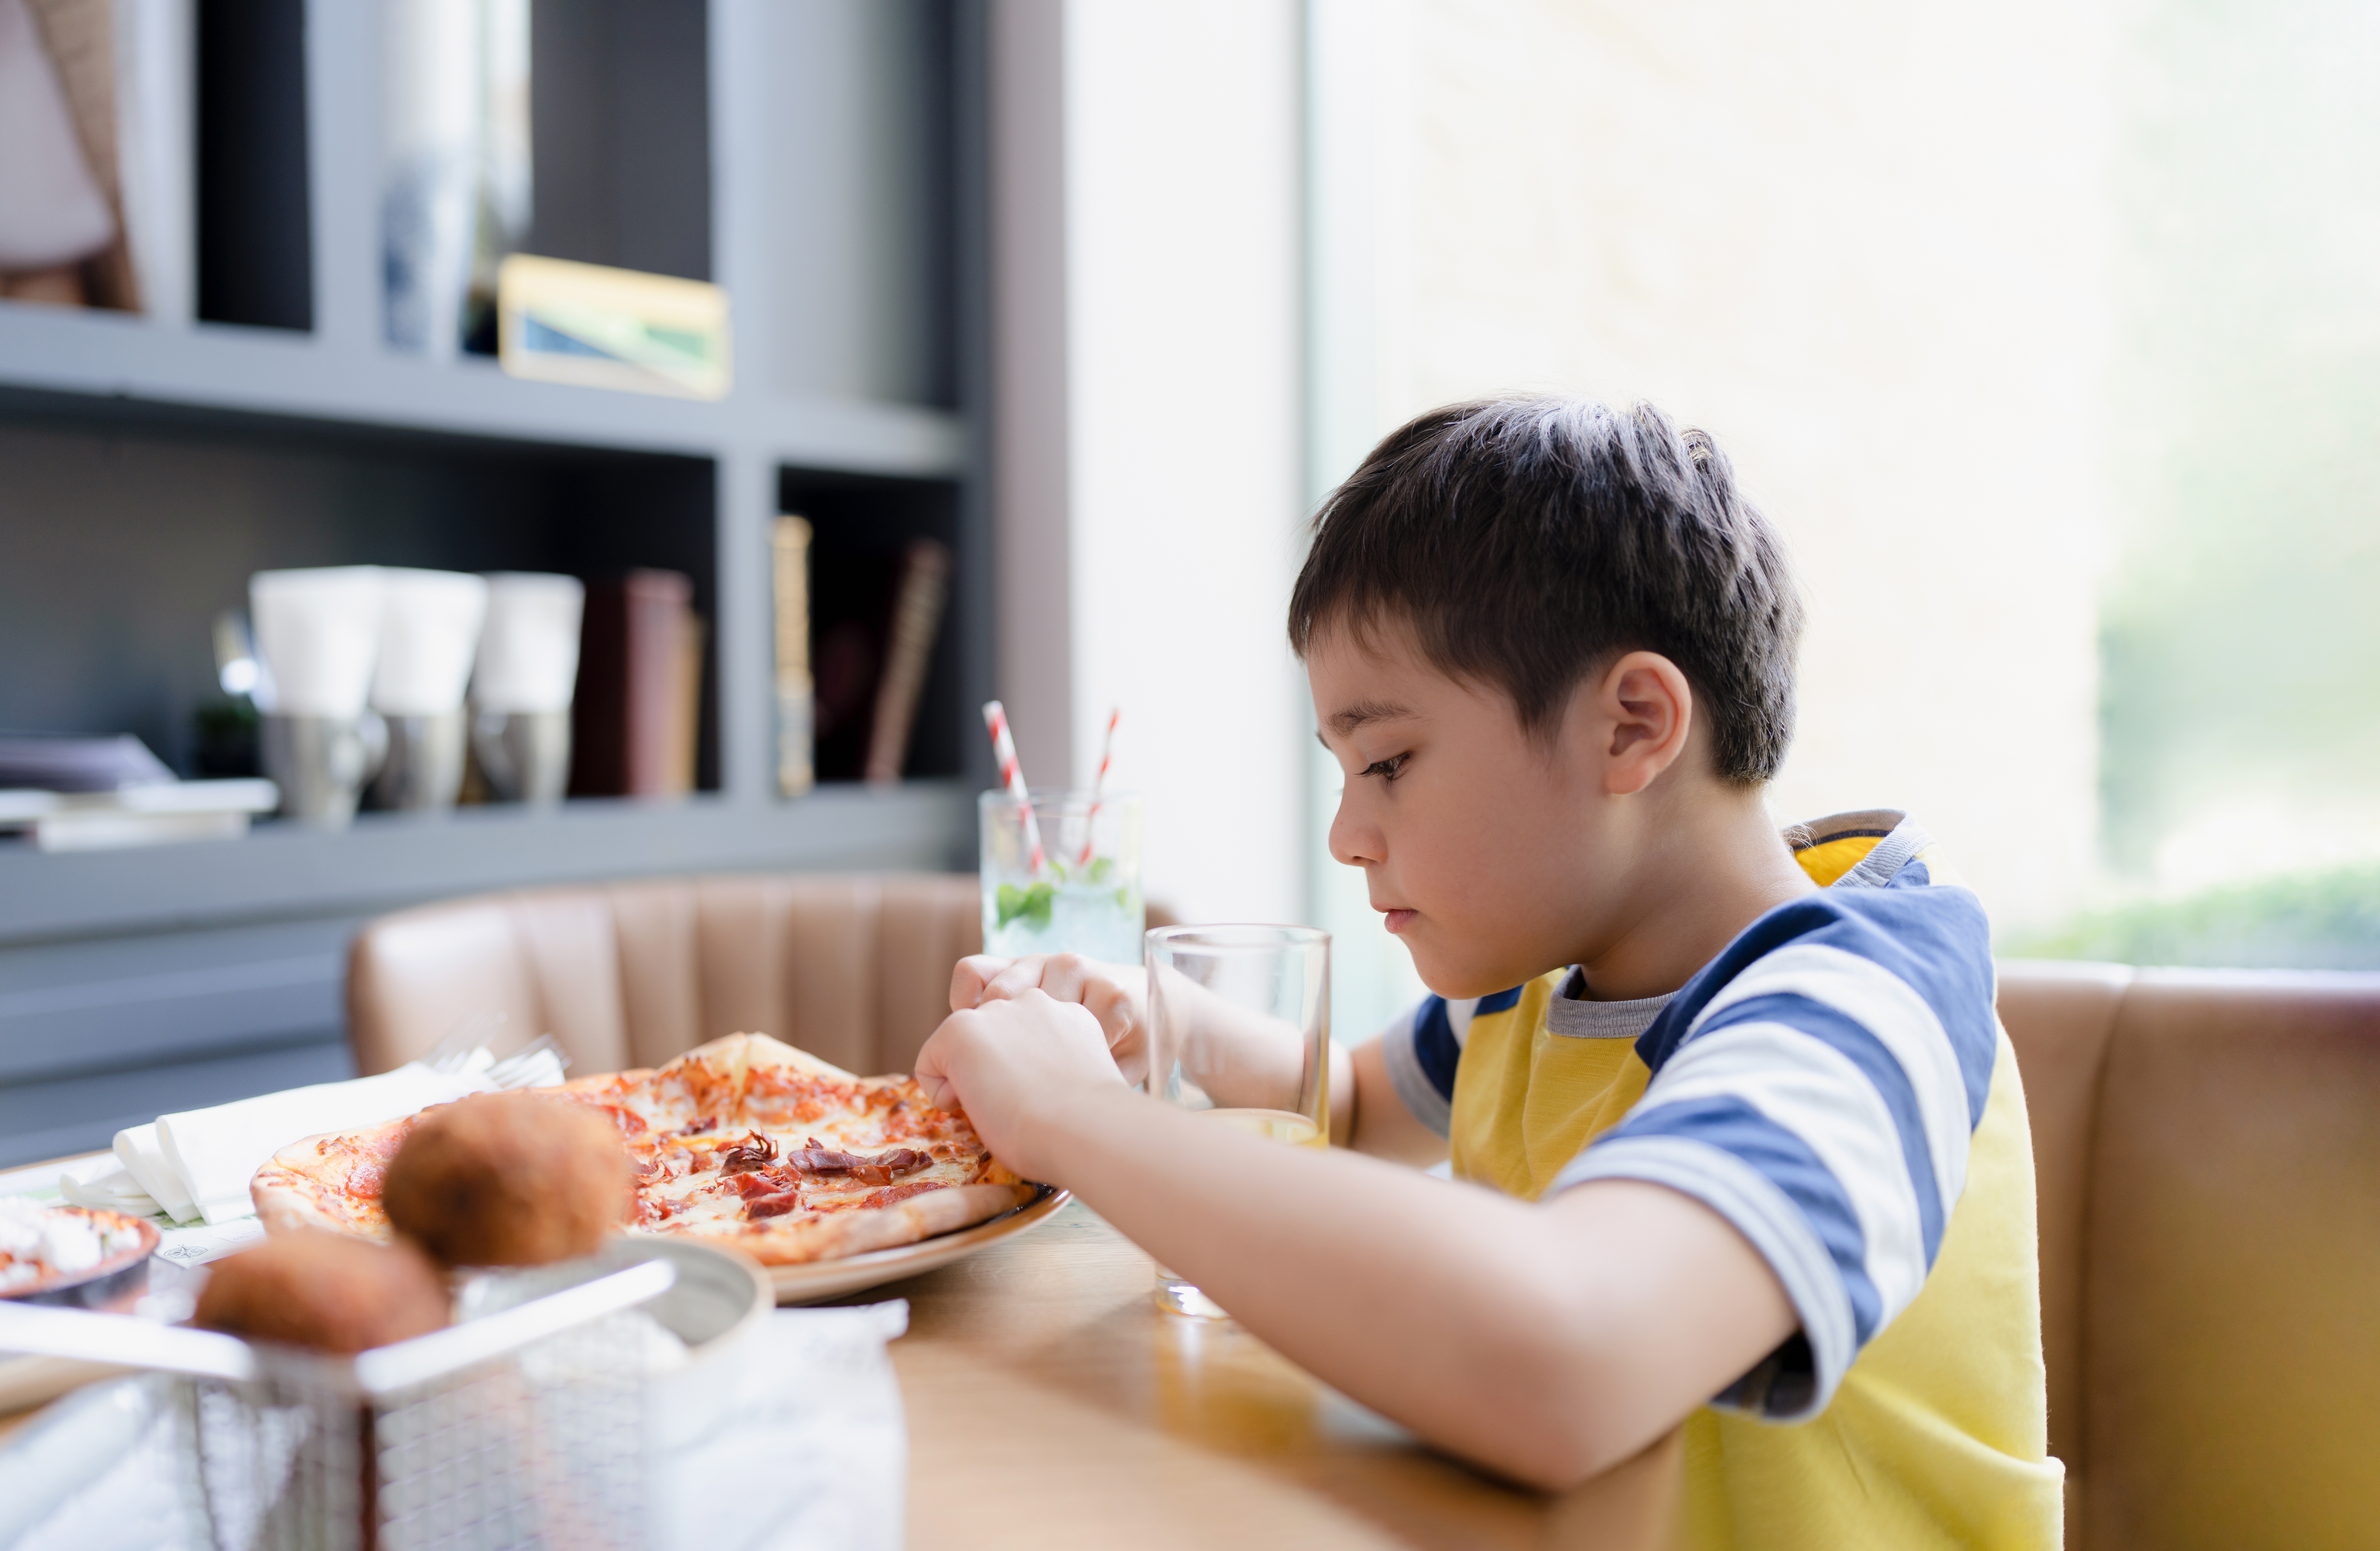 Boy eating pizza | Source: Shutterstock